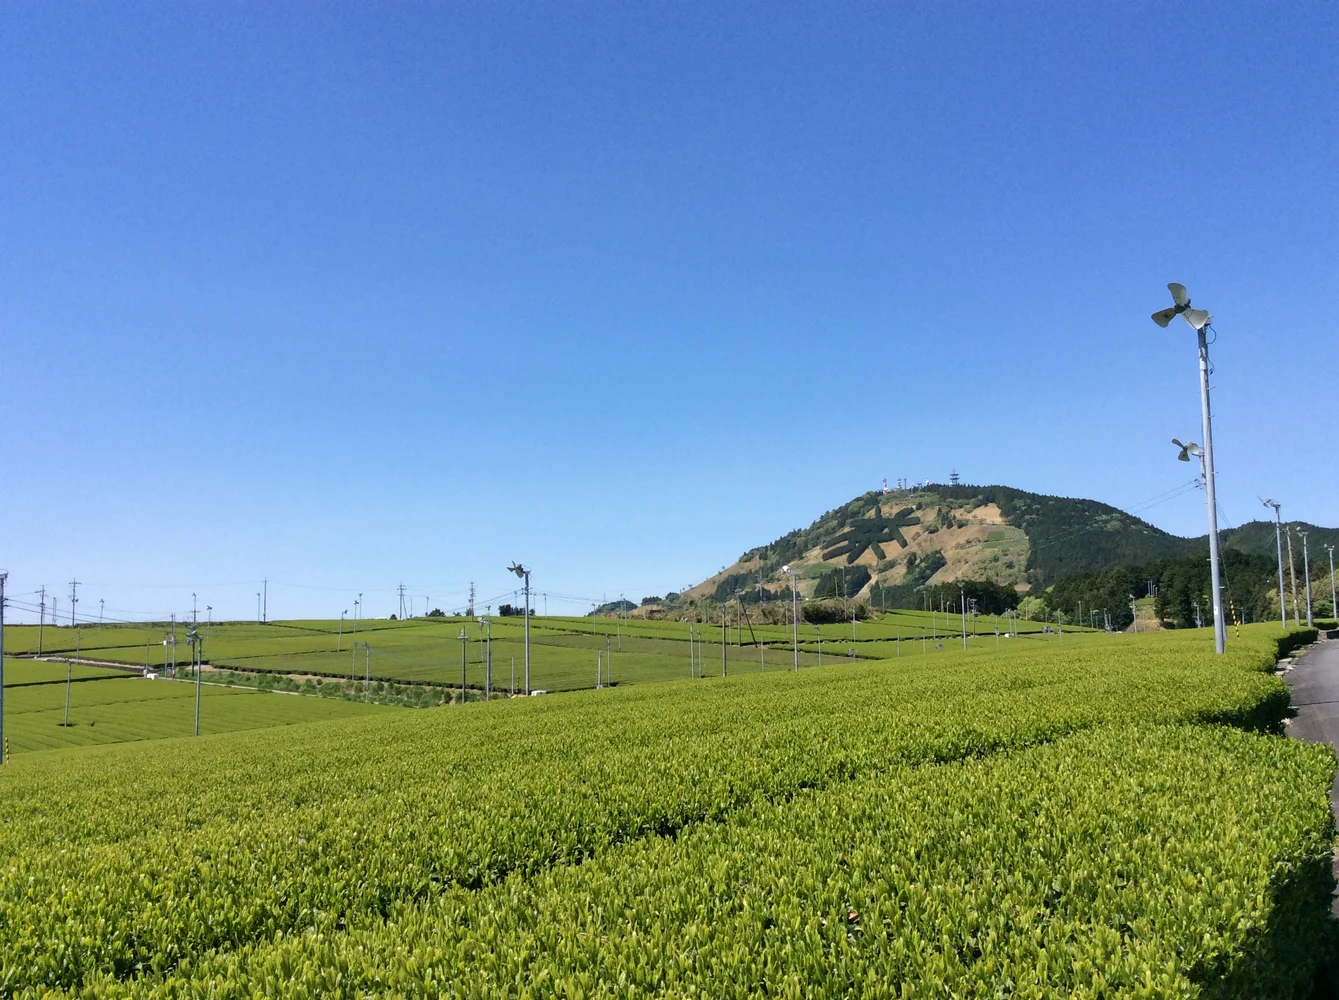 Enjoy a Special Green Tea Tour in Makinohara, Shizuoka